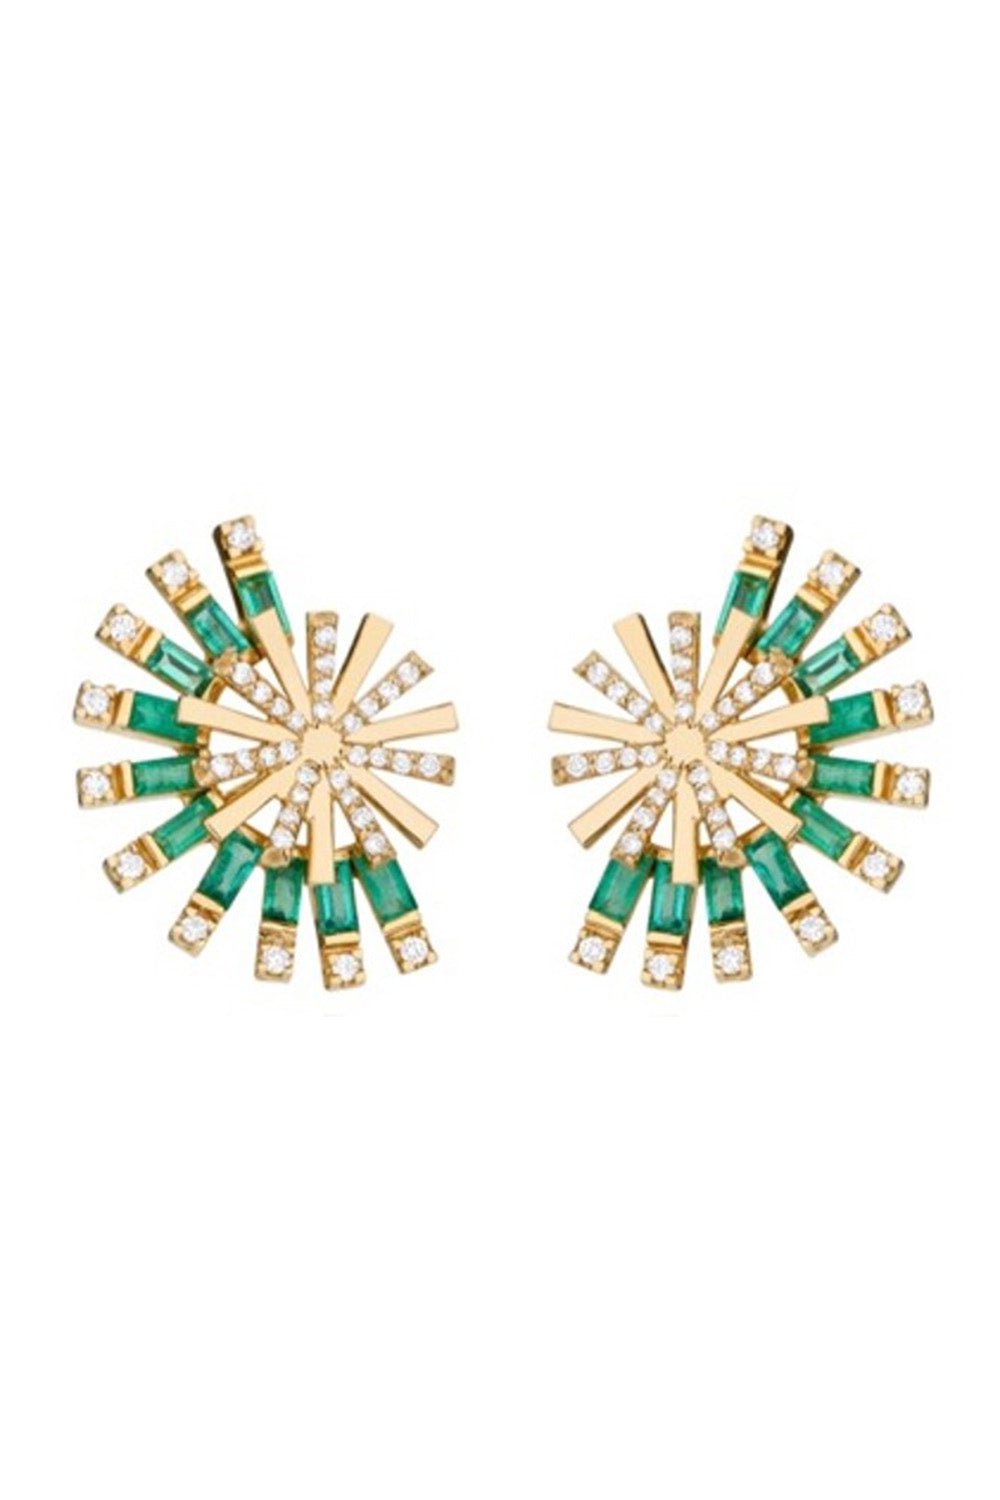 CAROL KAUFFMANN-Emerald Diamond Moulin Earrings-YELLOW GOLD